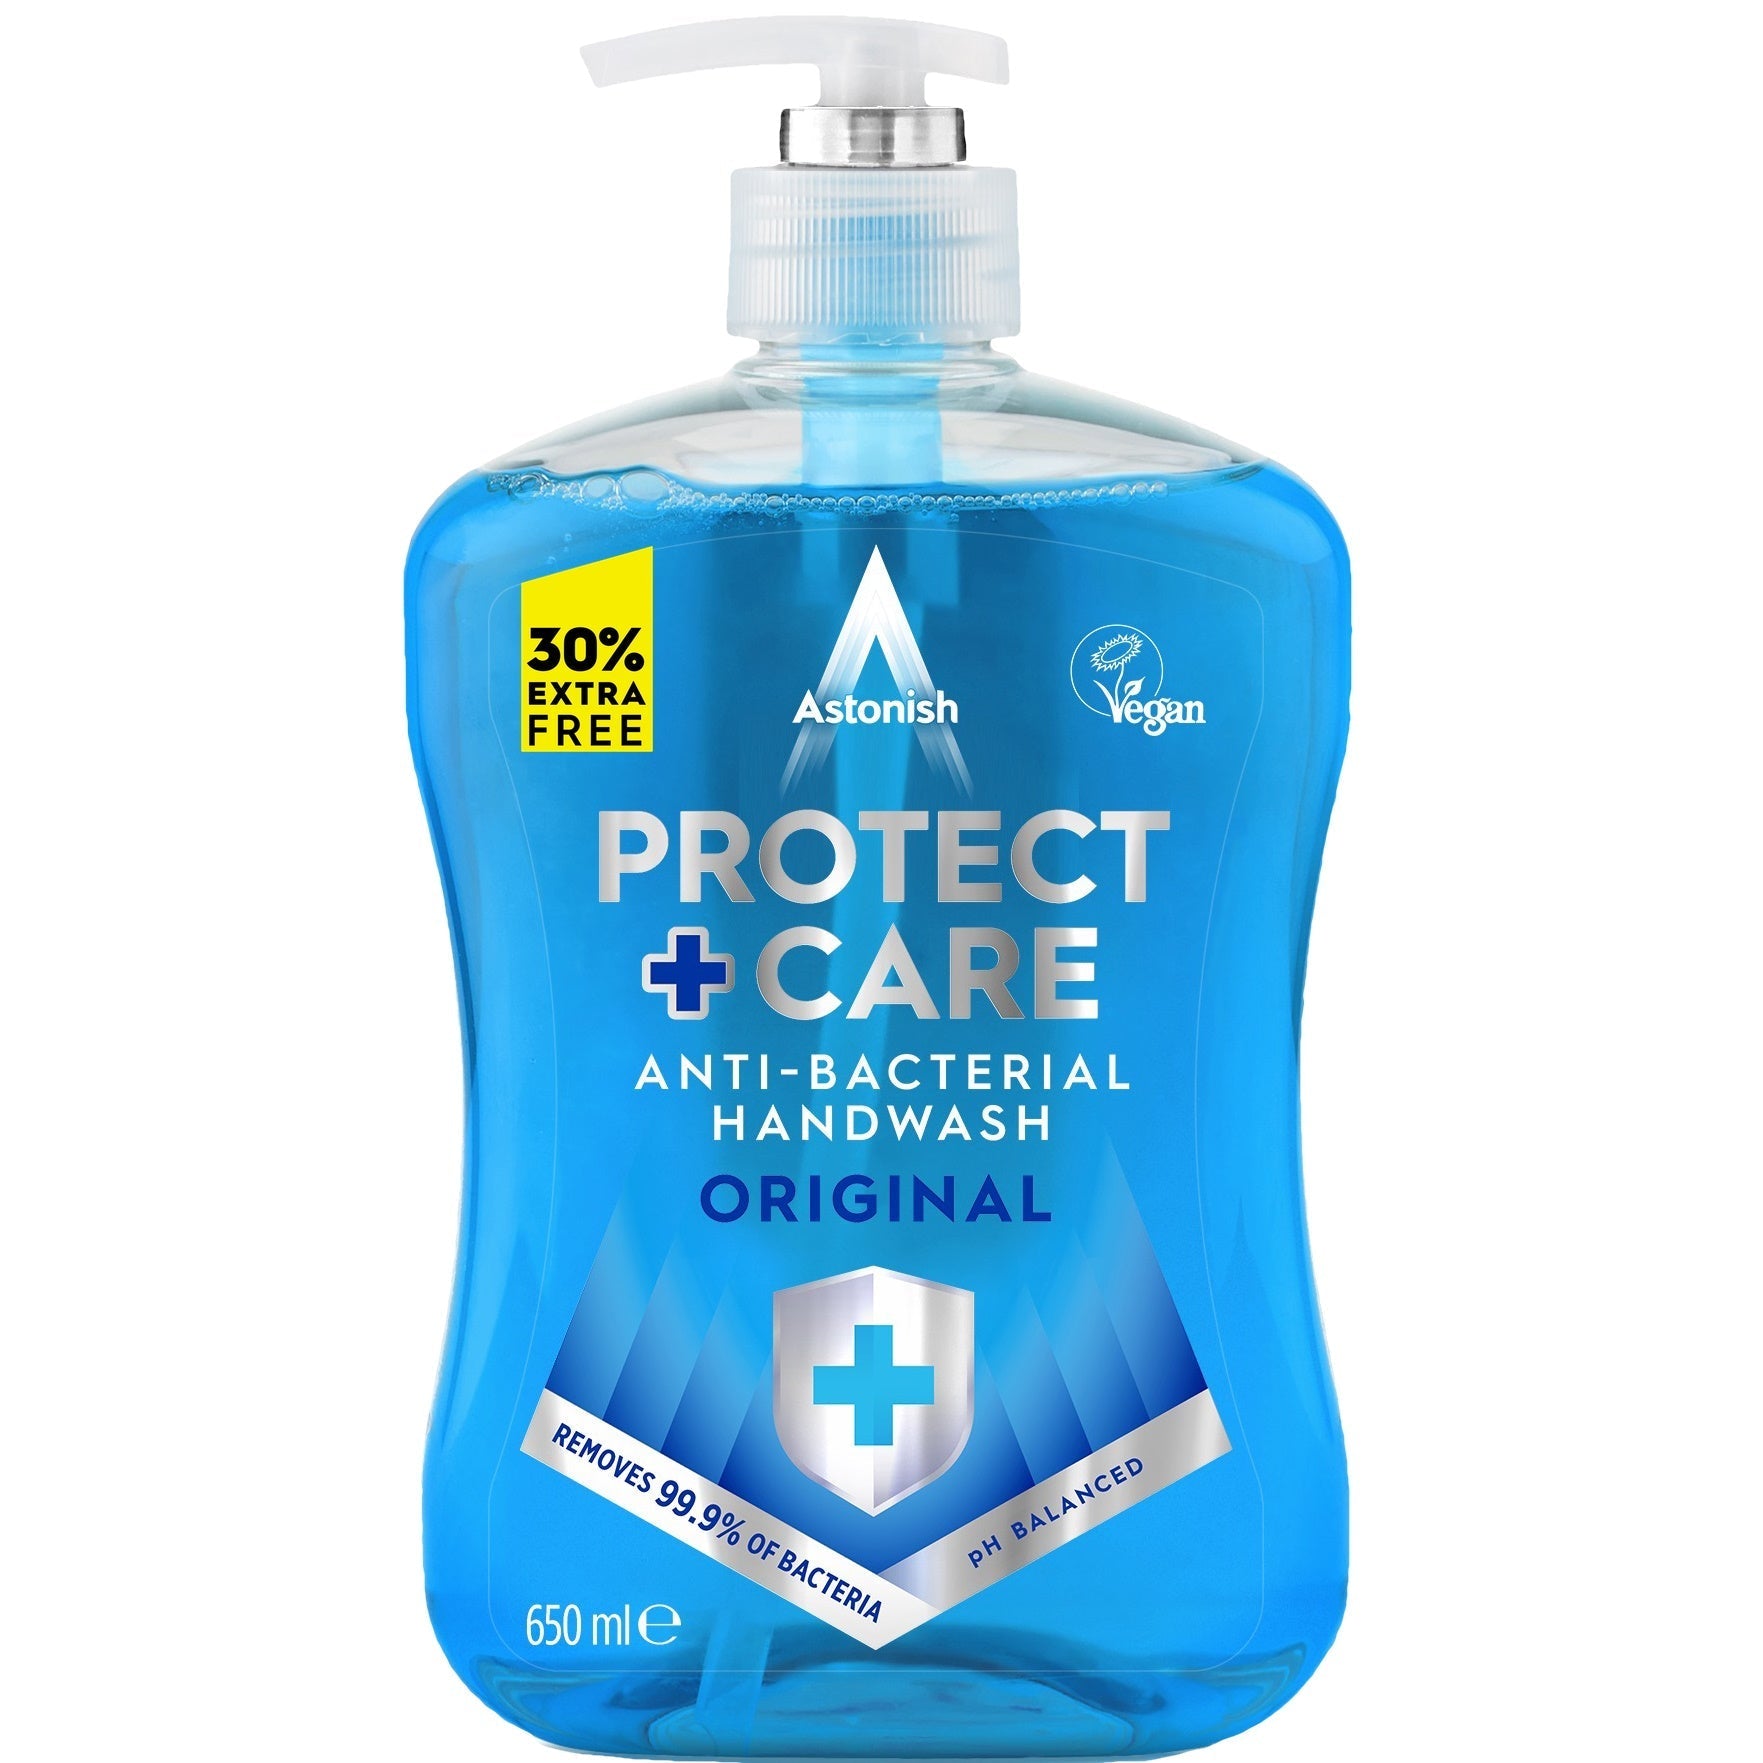 Astonish Protect & Care Anti-Bacterial Handwash 500ml - Original - Premium Handwash from ASTONISH - Just $1.70! Shop now at W Hurst & Son (IW) Ltd